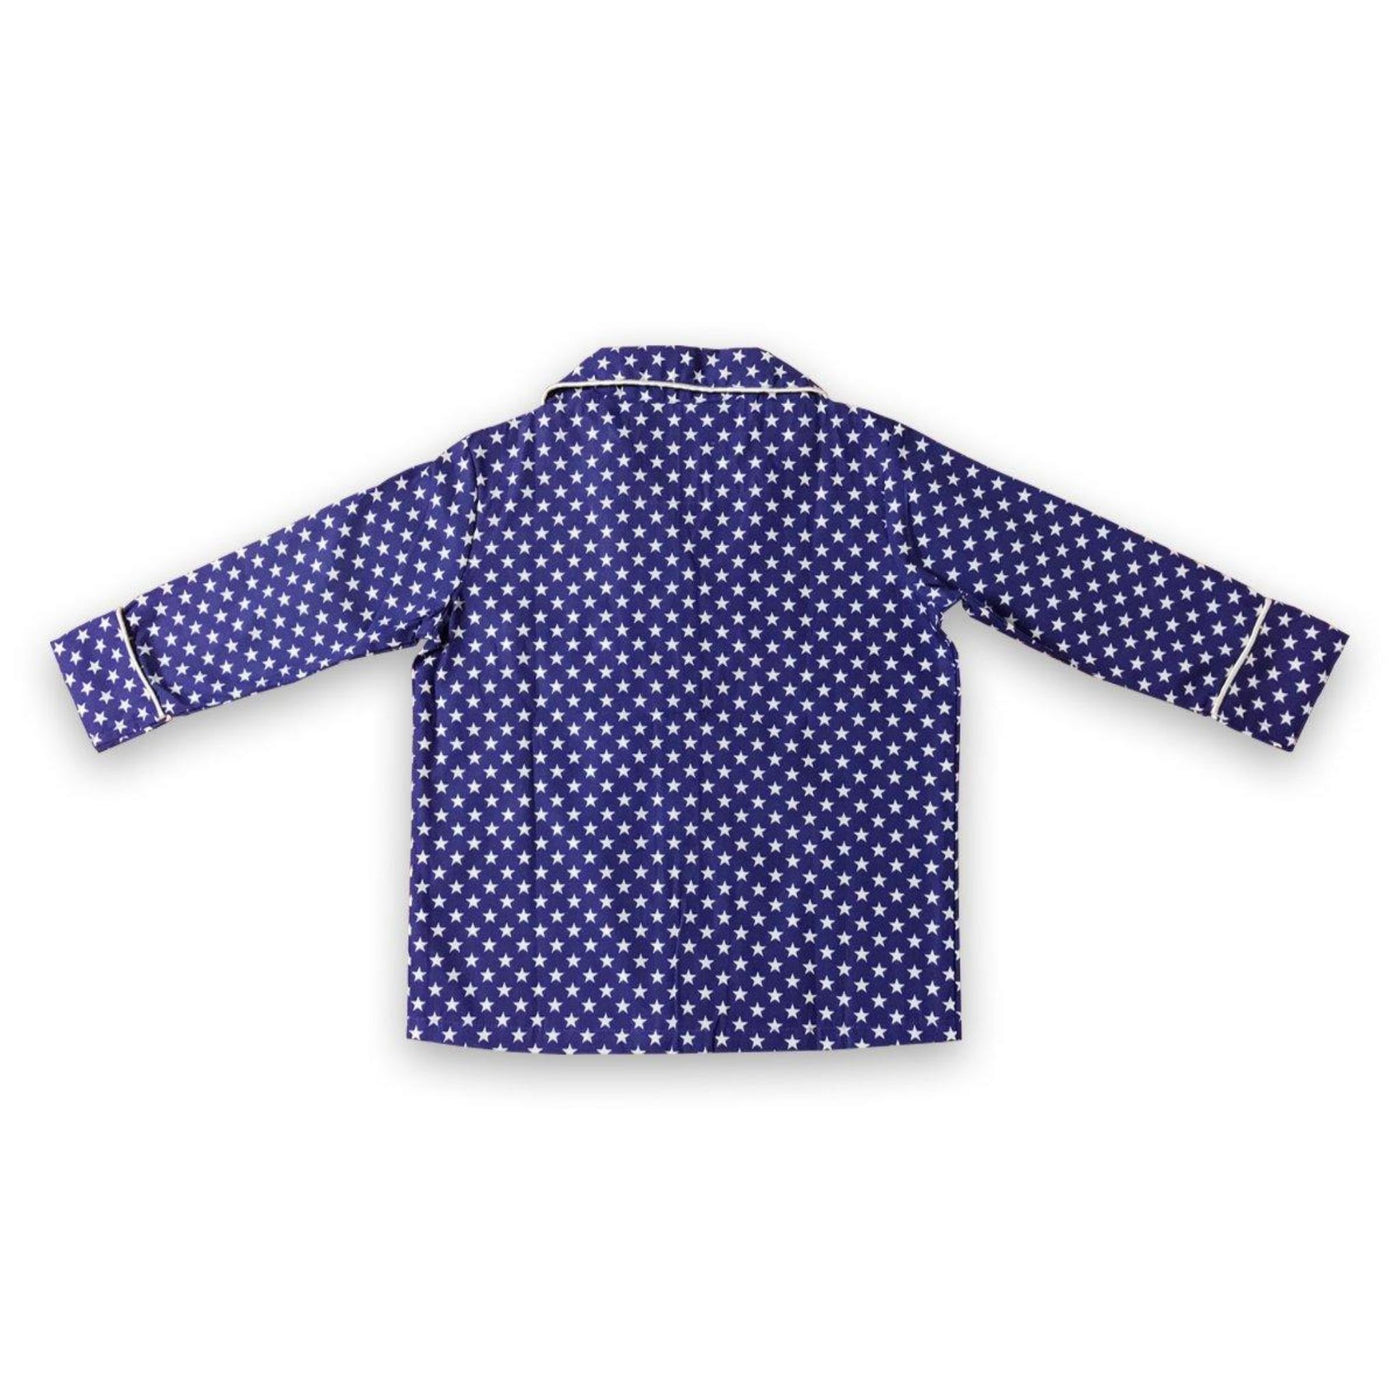 Pocket Nightwear for Girls and Boys - Star print Joeycare 